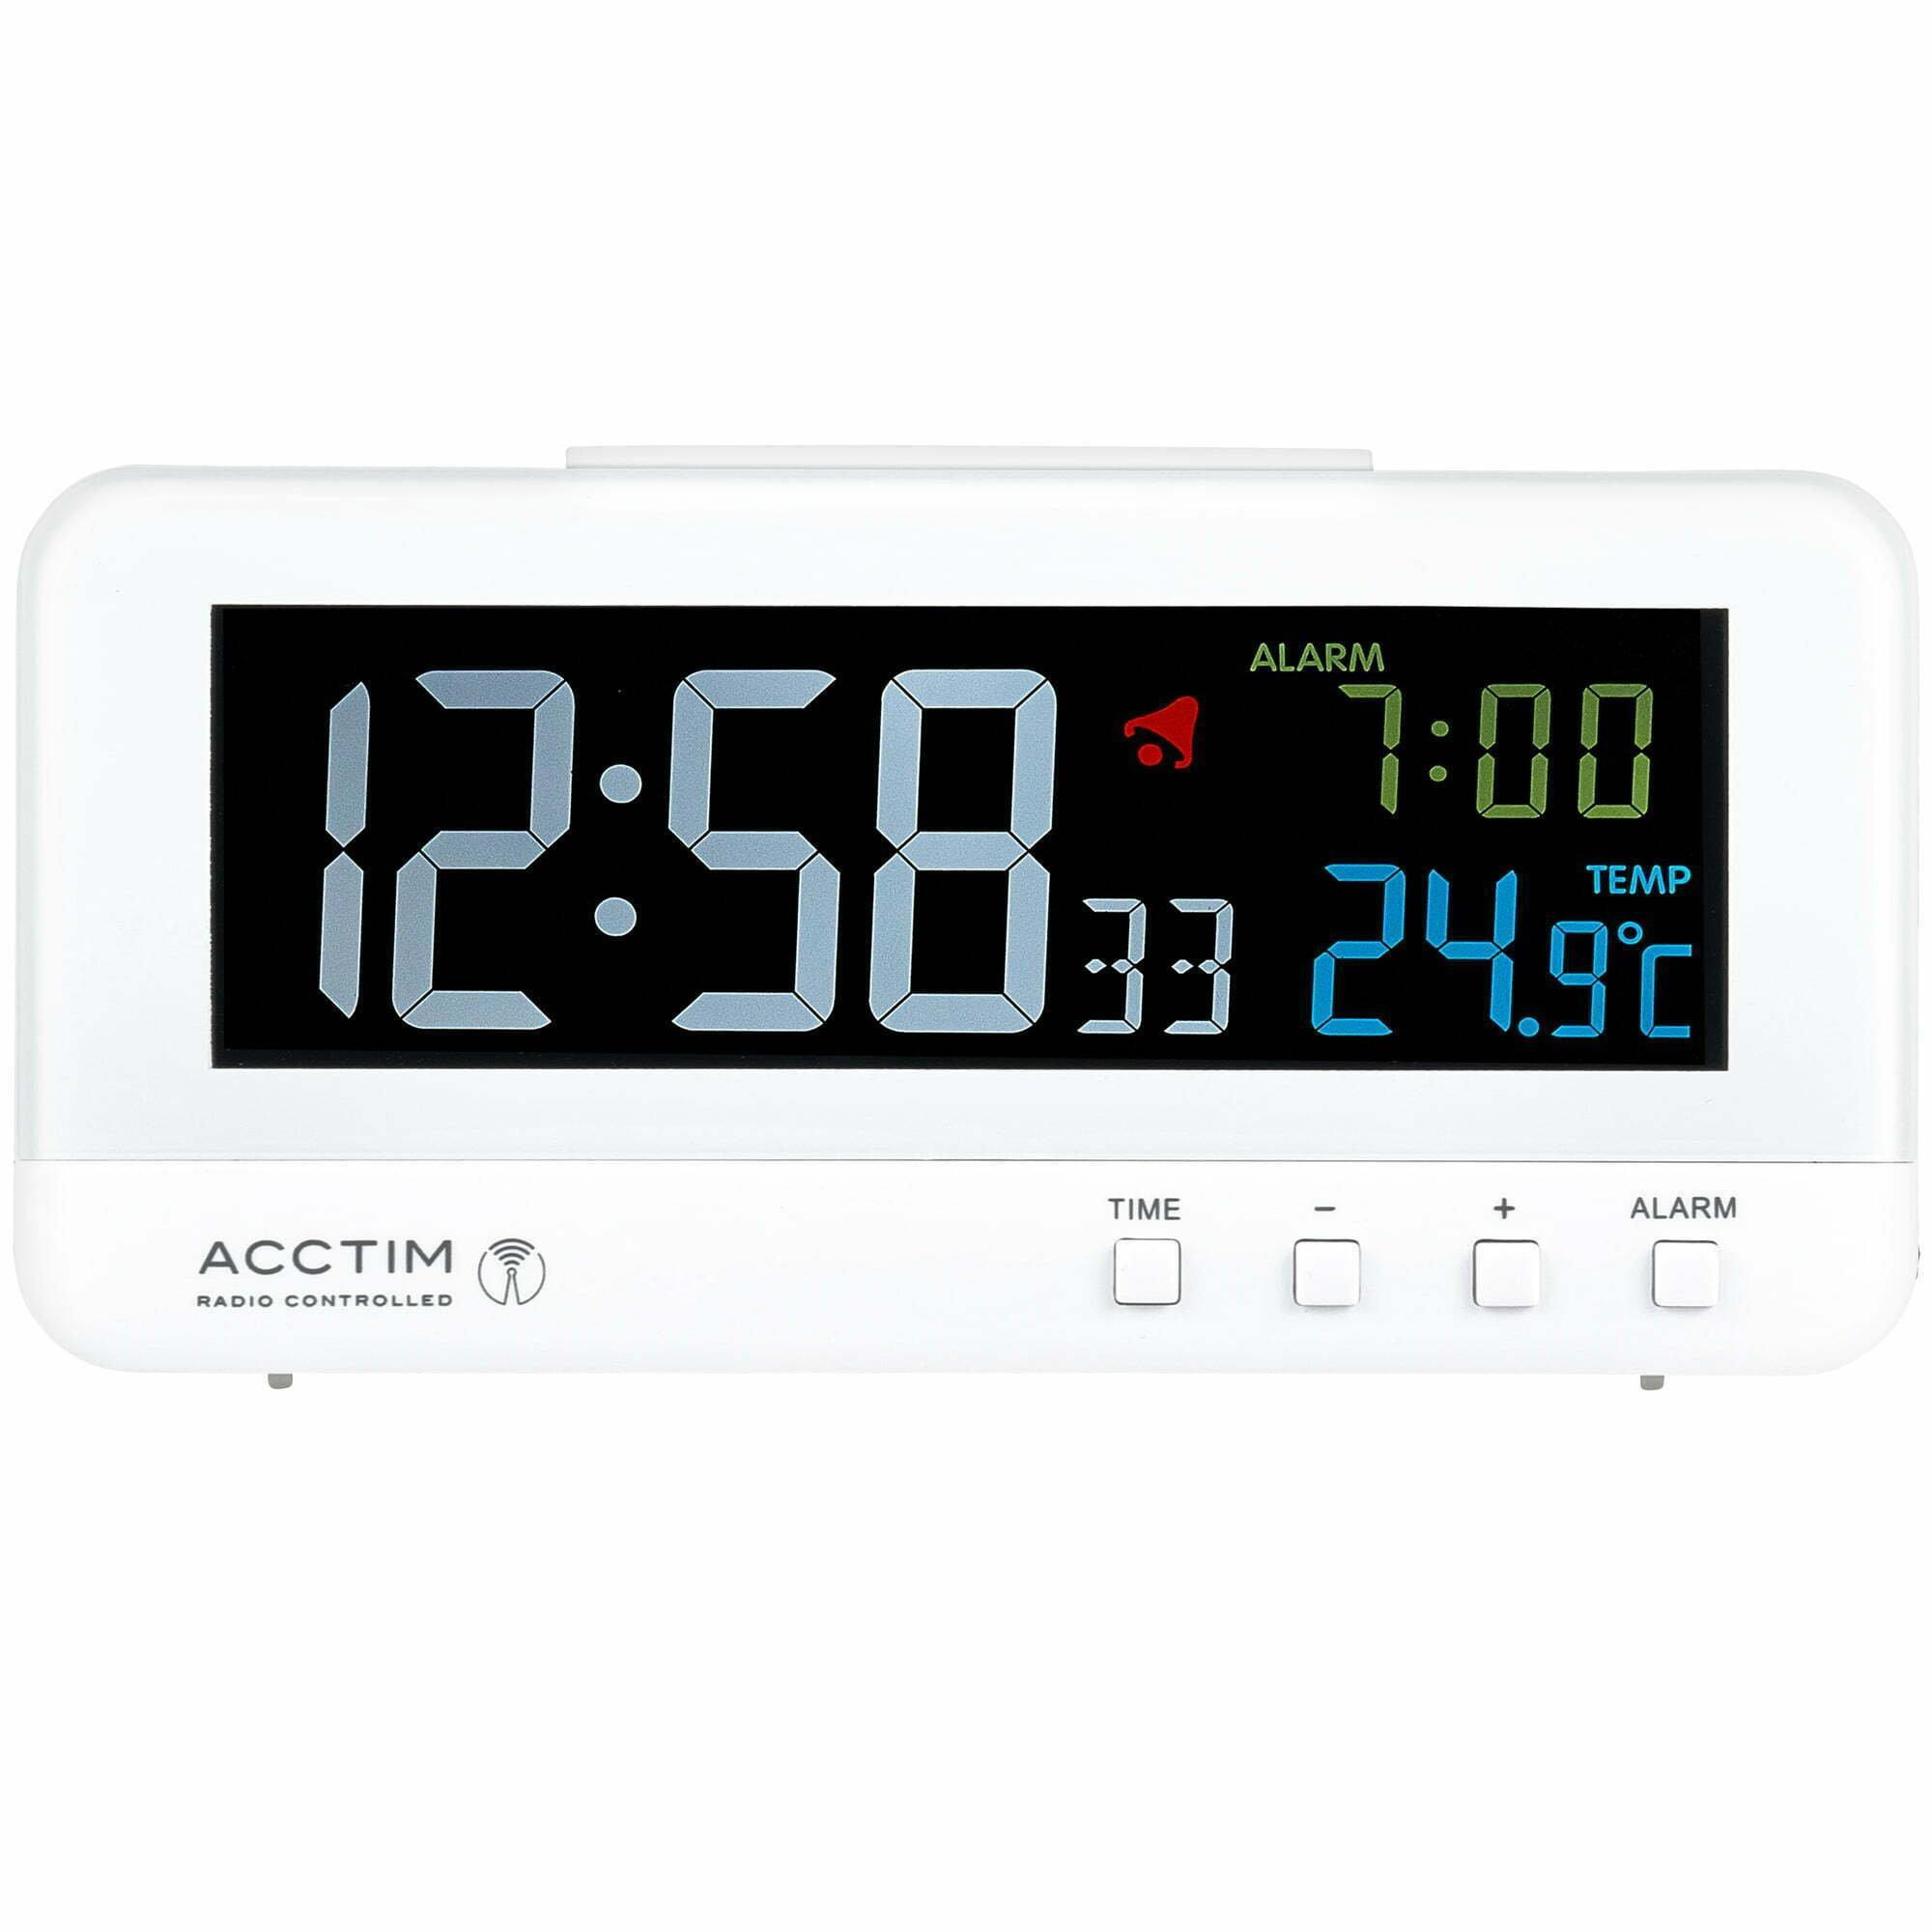 Rialto Digital Alarm Clock Radio Controlled Crescendo Alarm Thermometer High Contrast Coloured VA Display - image 1